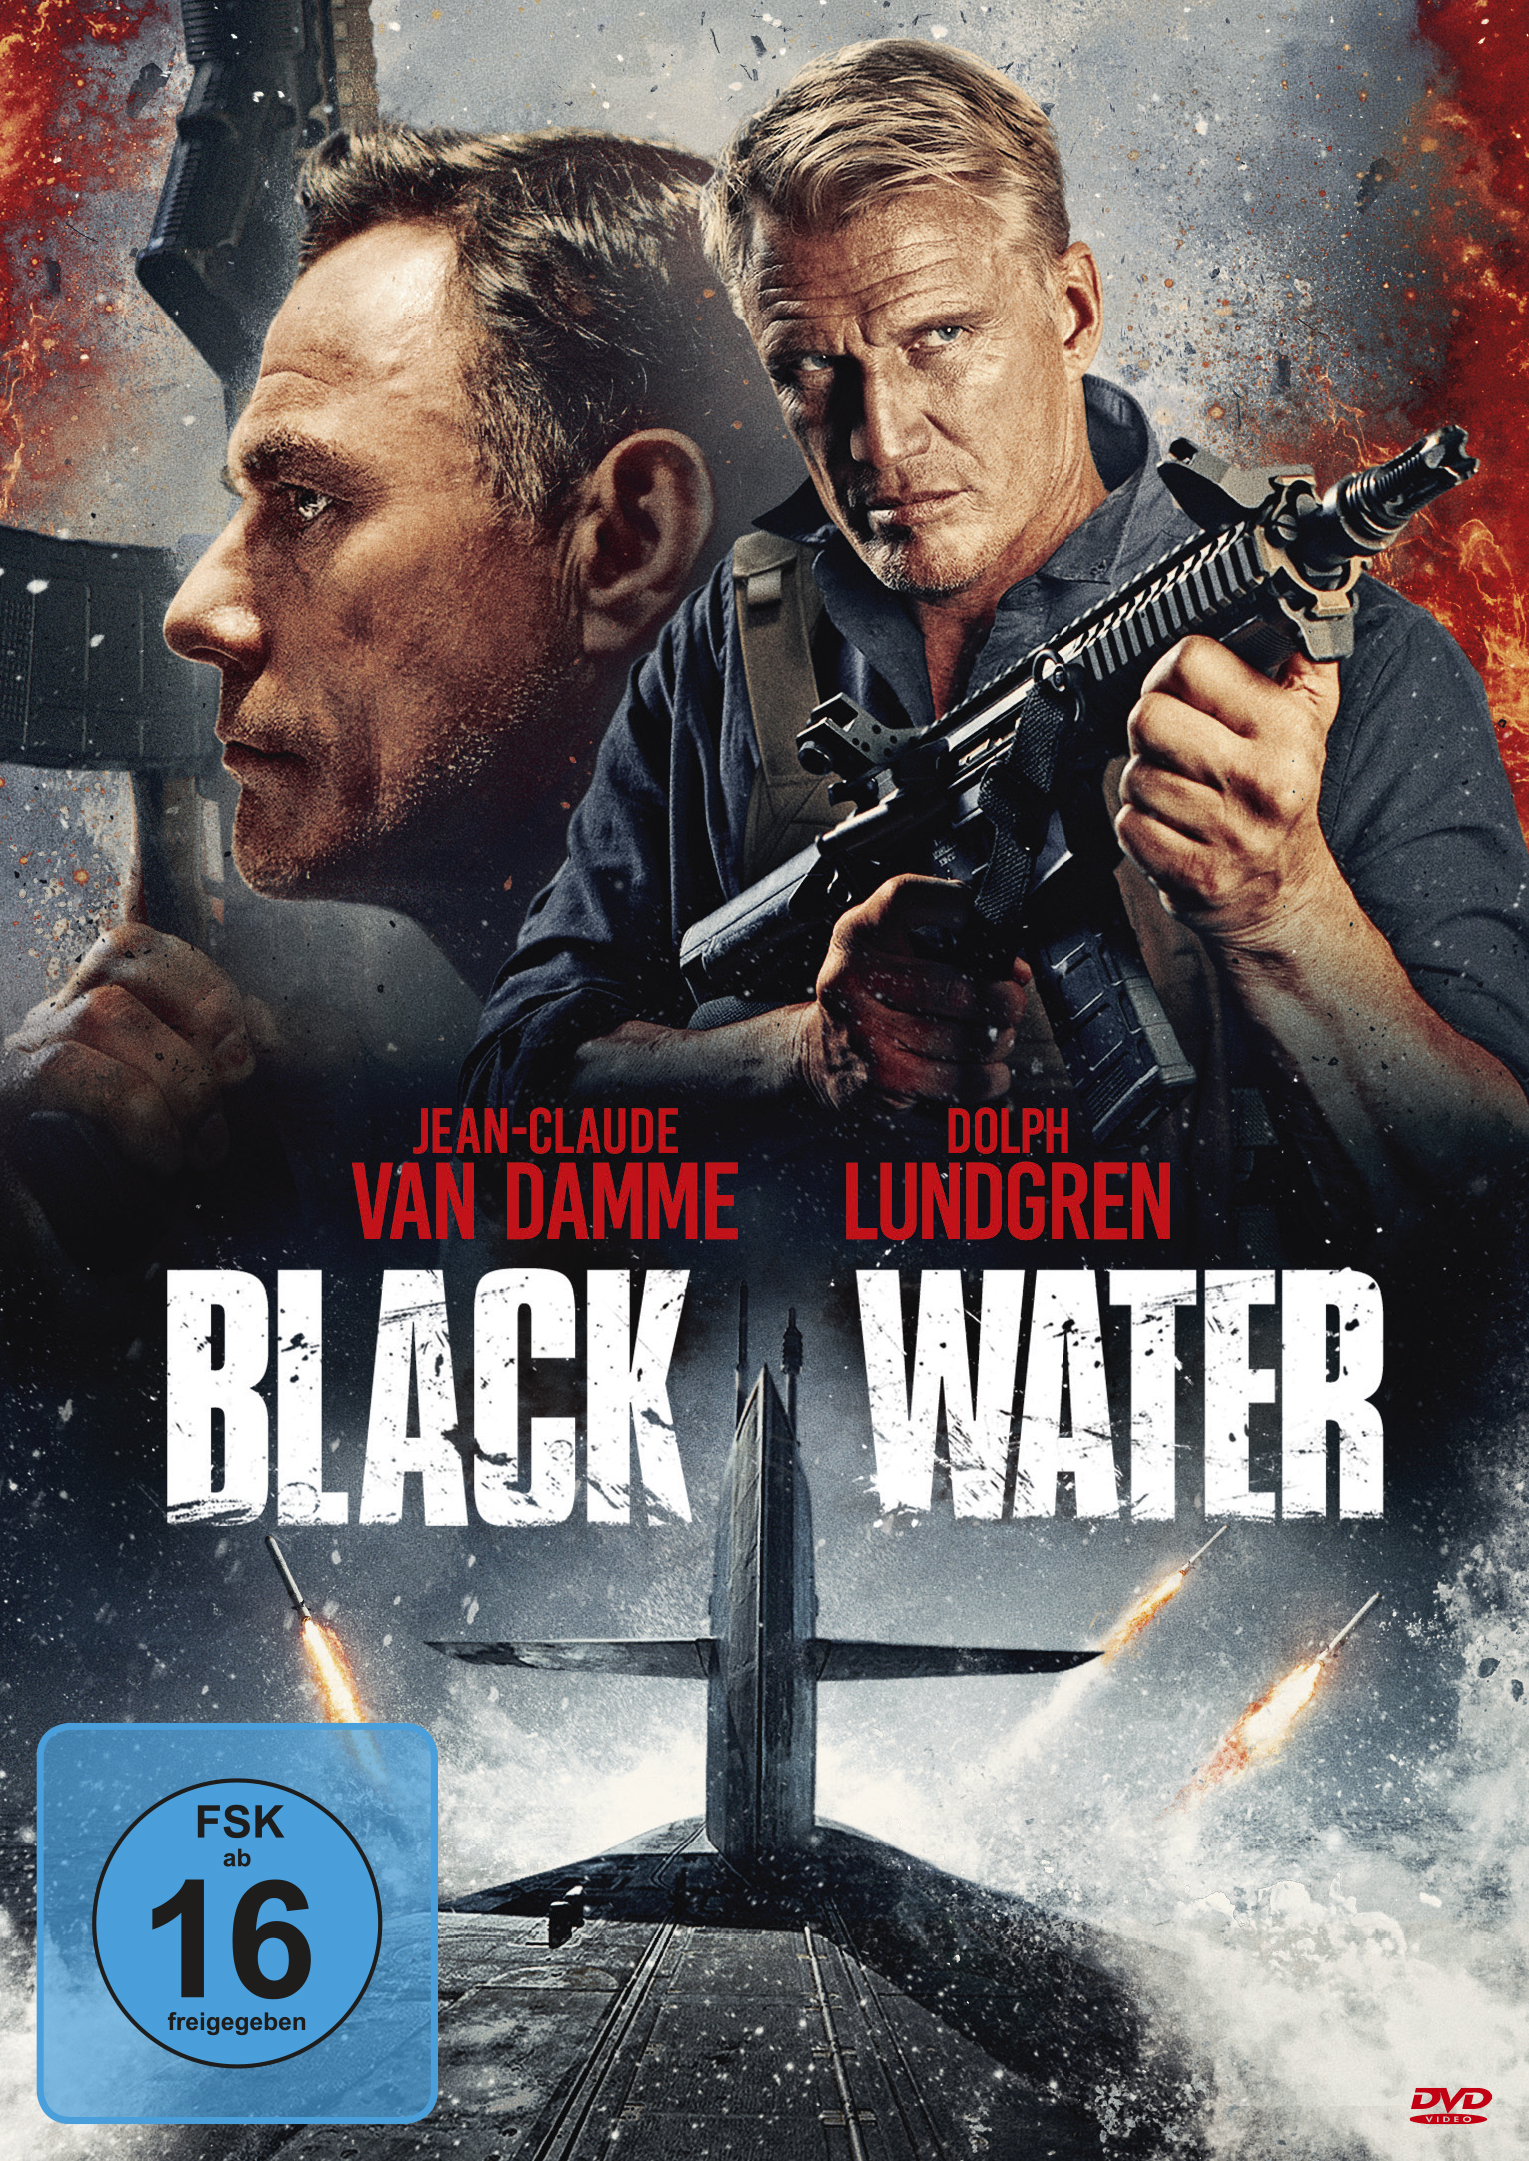 Black DVD Water